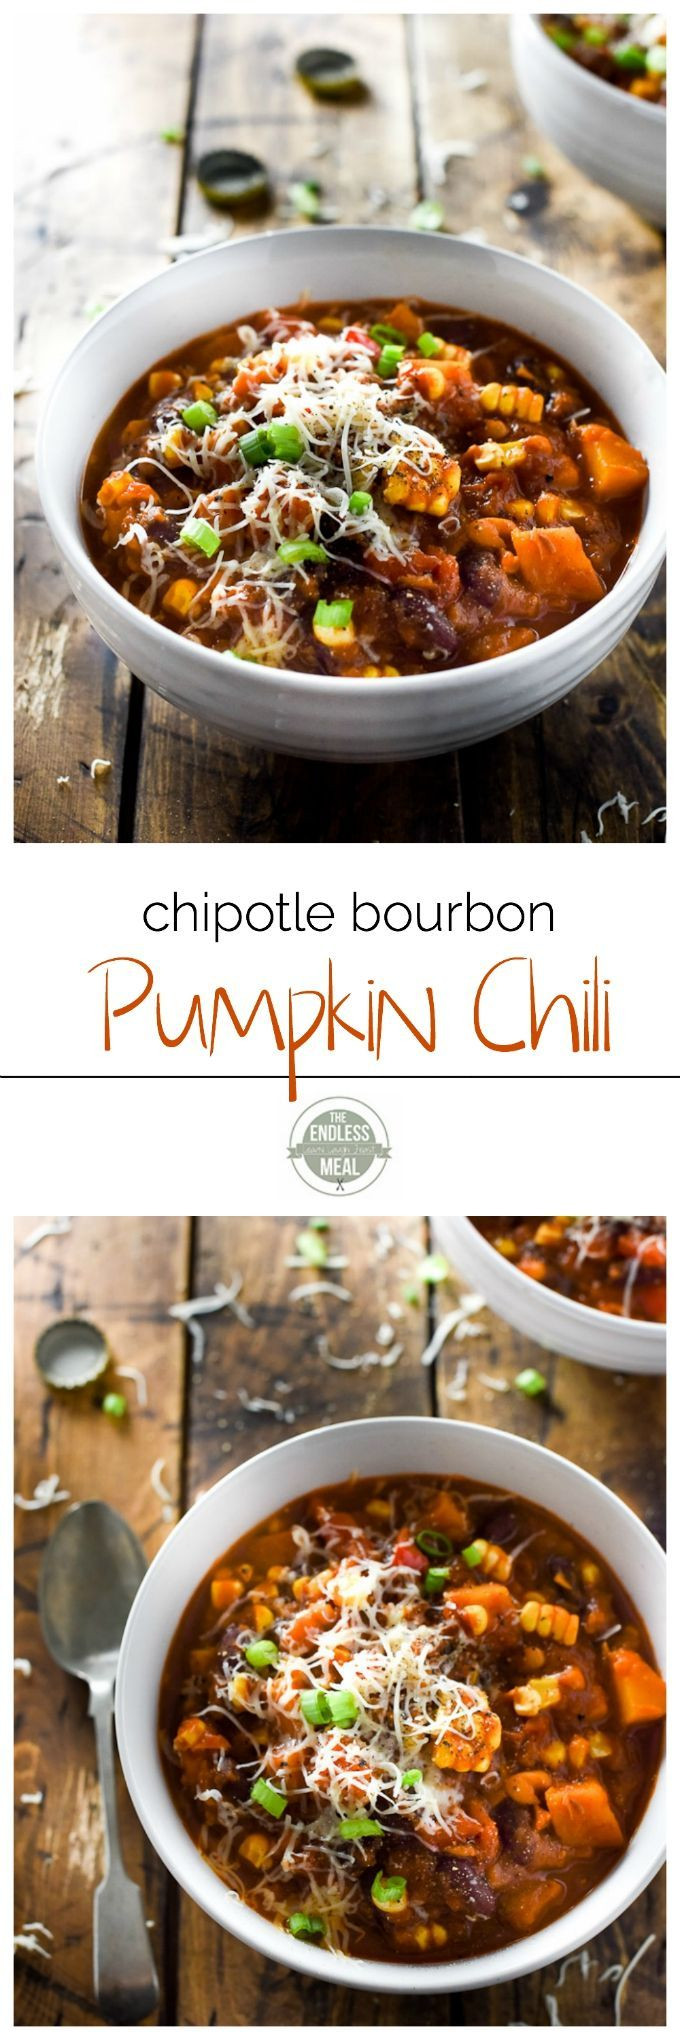 Healthy Pumpkin Recipes Dinner
 Best 25 Fall dinner recipes ideas on Pinterest